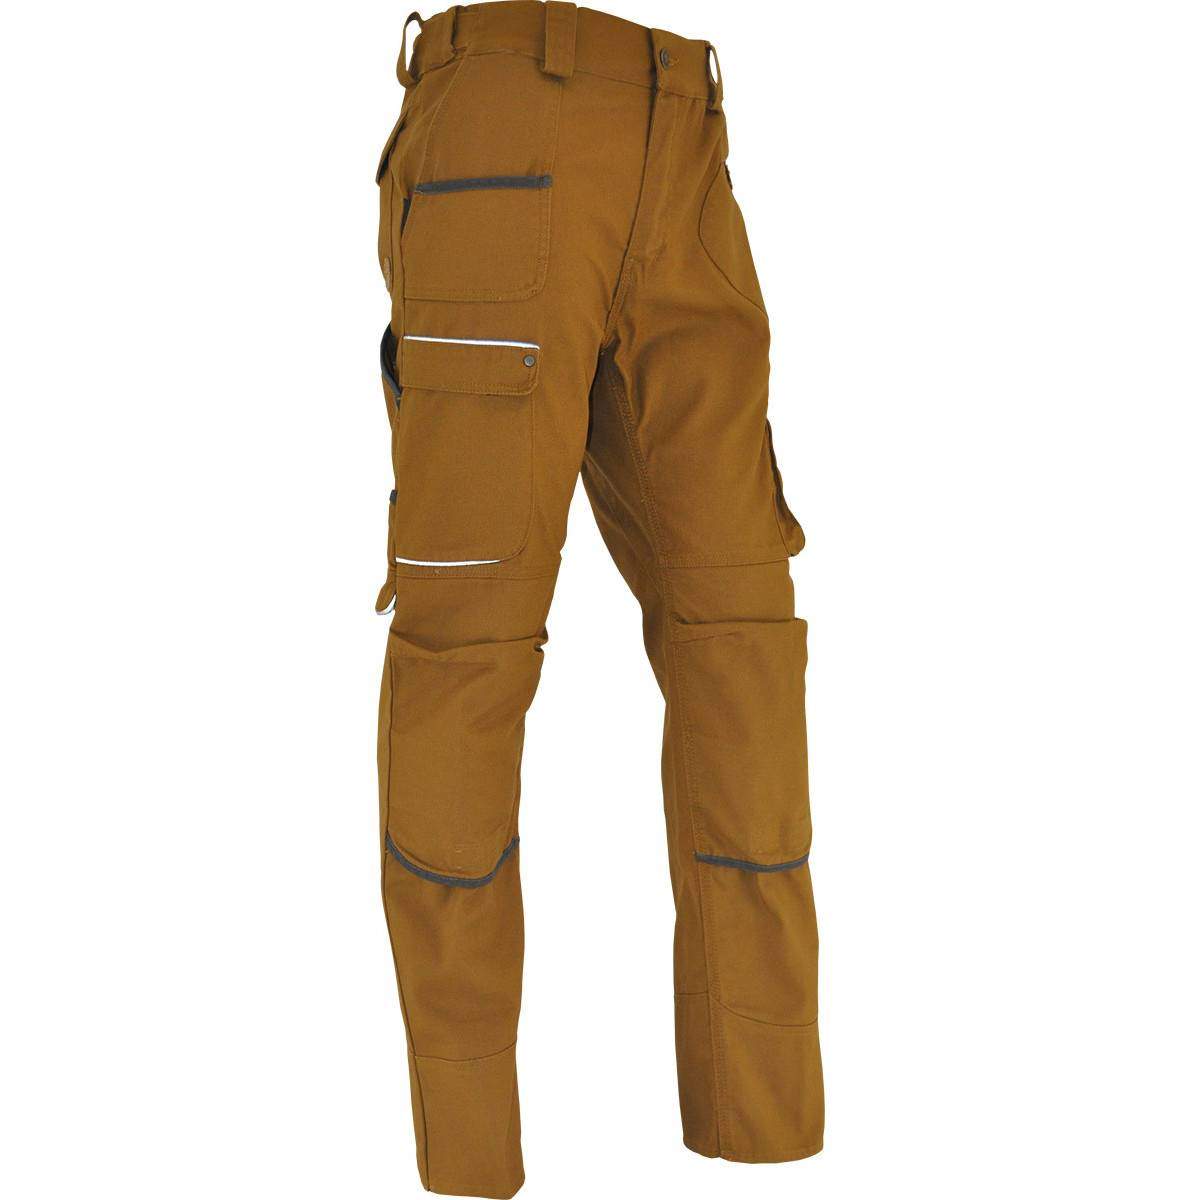 SAHARA work trousers size 42, bronze